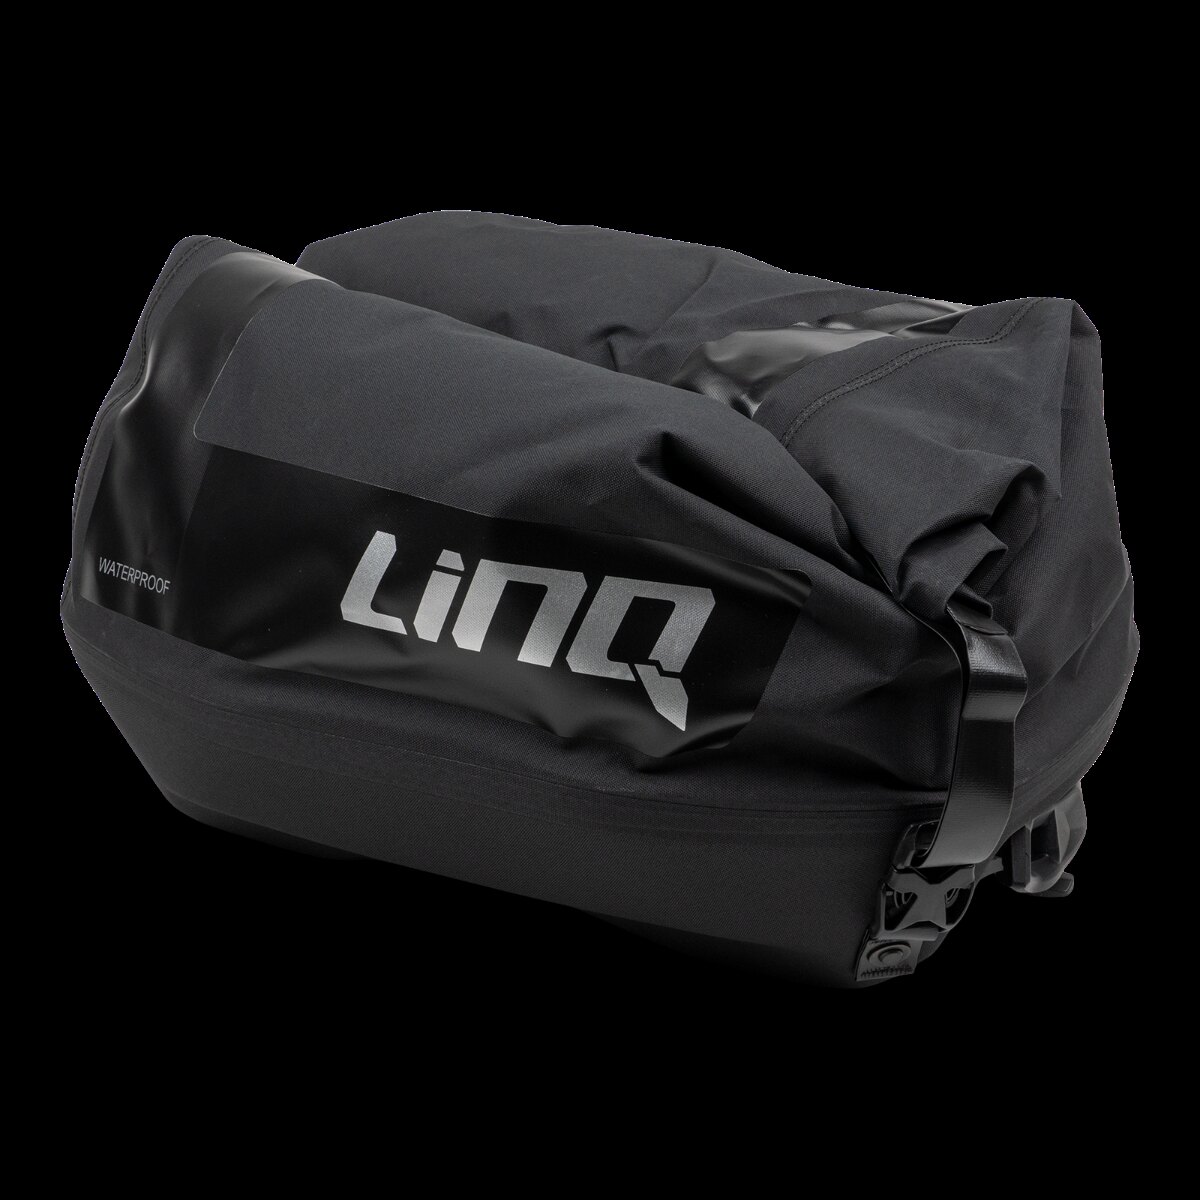 LinQ Dry Bag